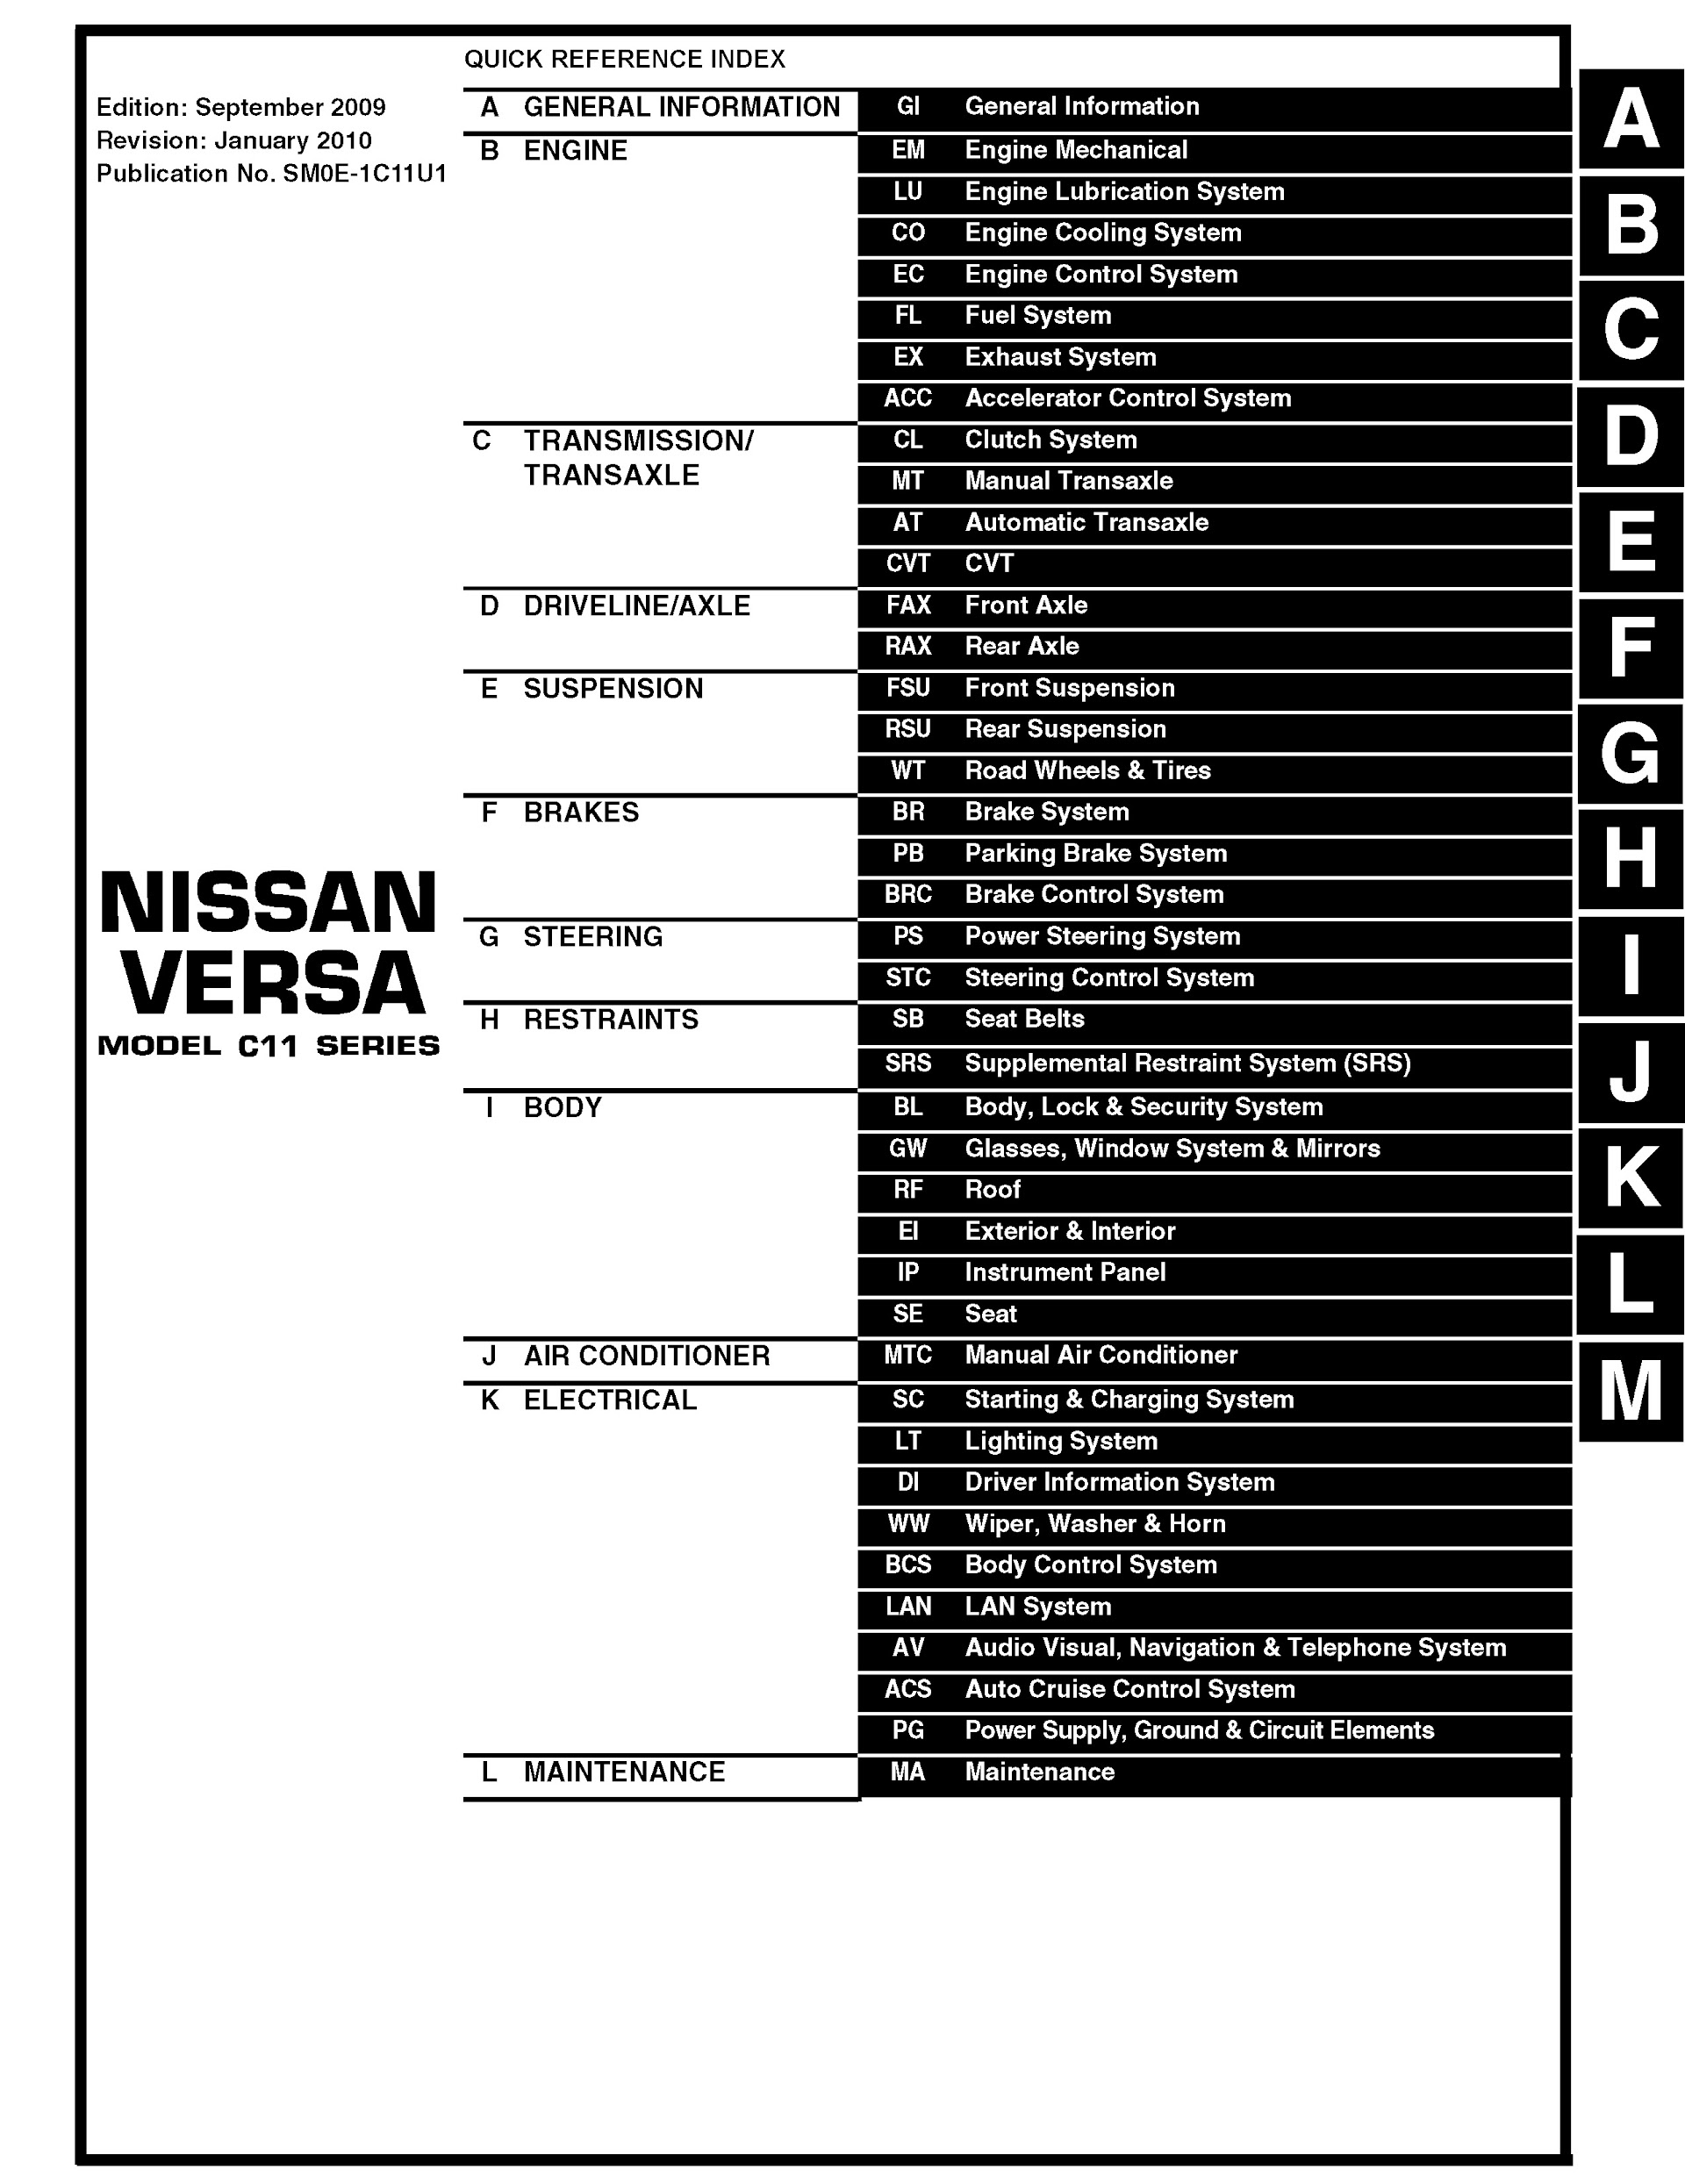 Contents of the 2010 Nissan Versa Repair Manual.